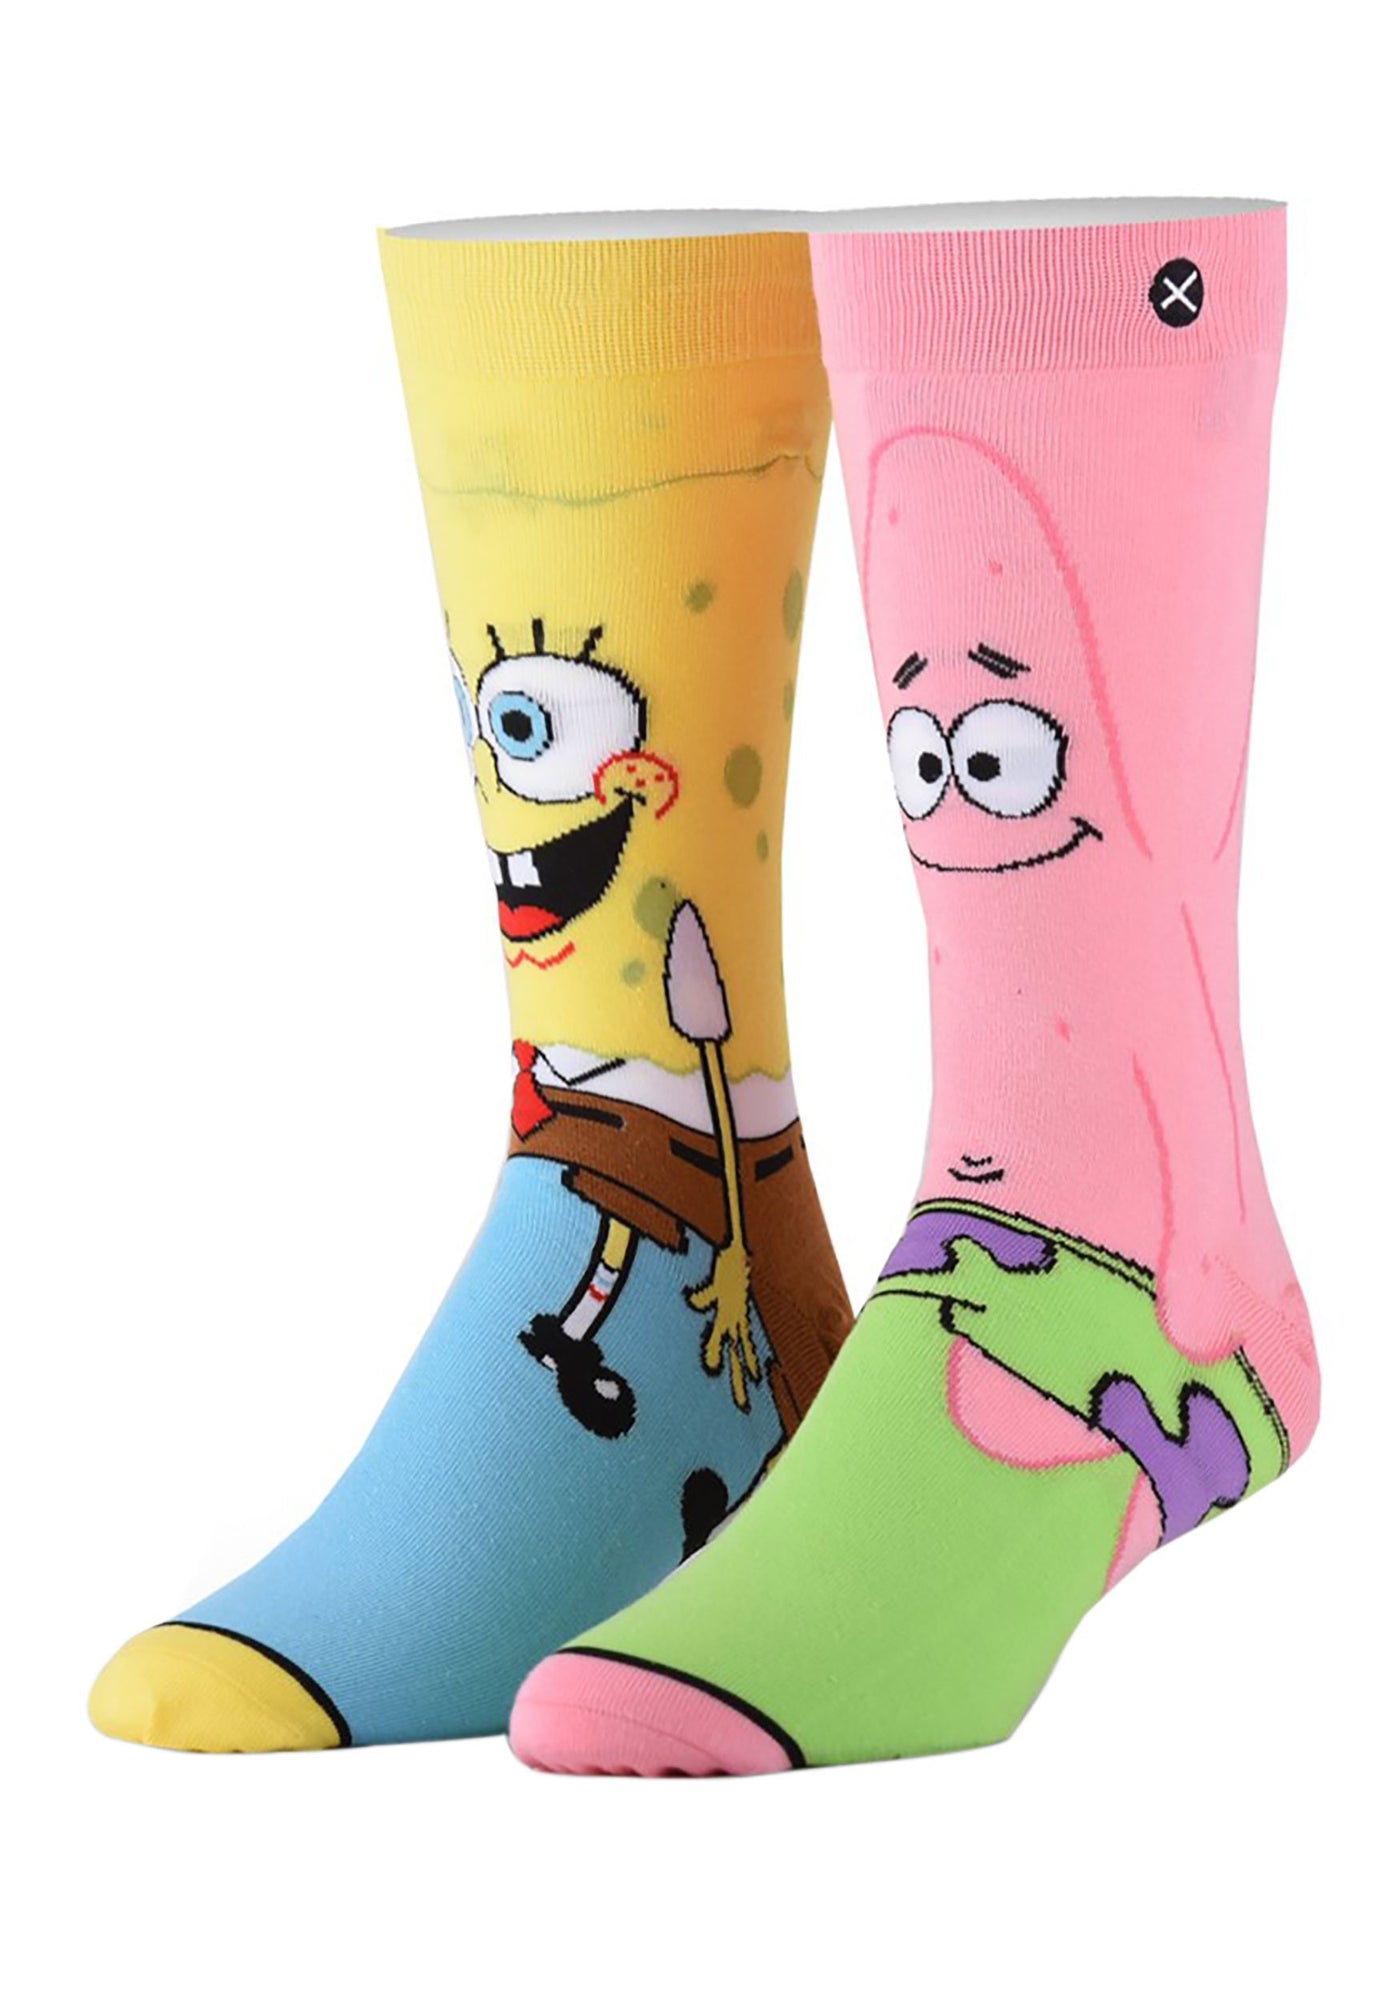 "Spongebob & Patrick" Cotton Crew Socks by ODD Sox